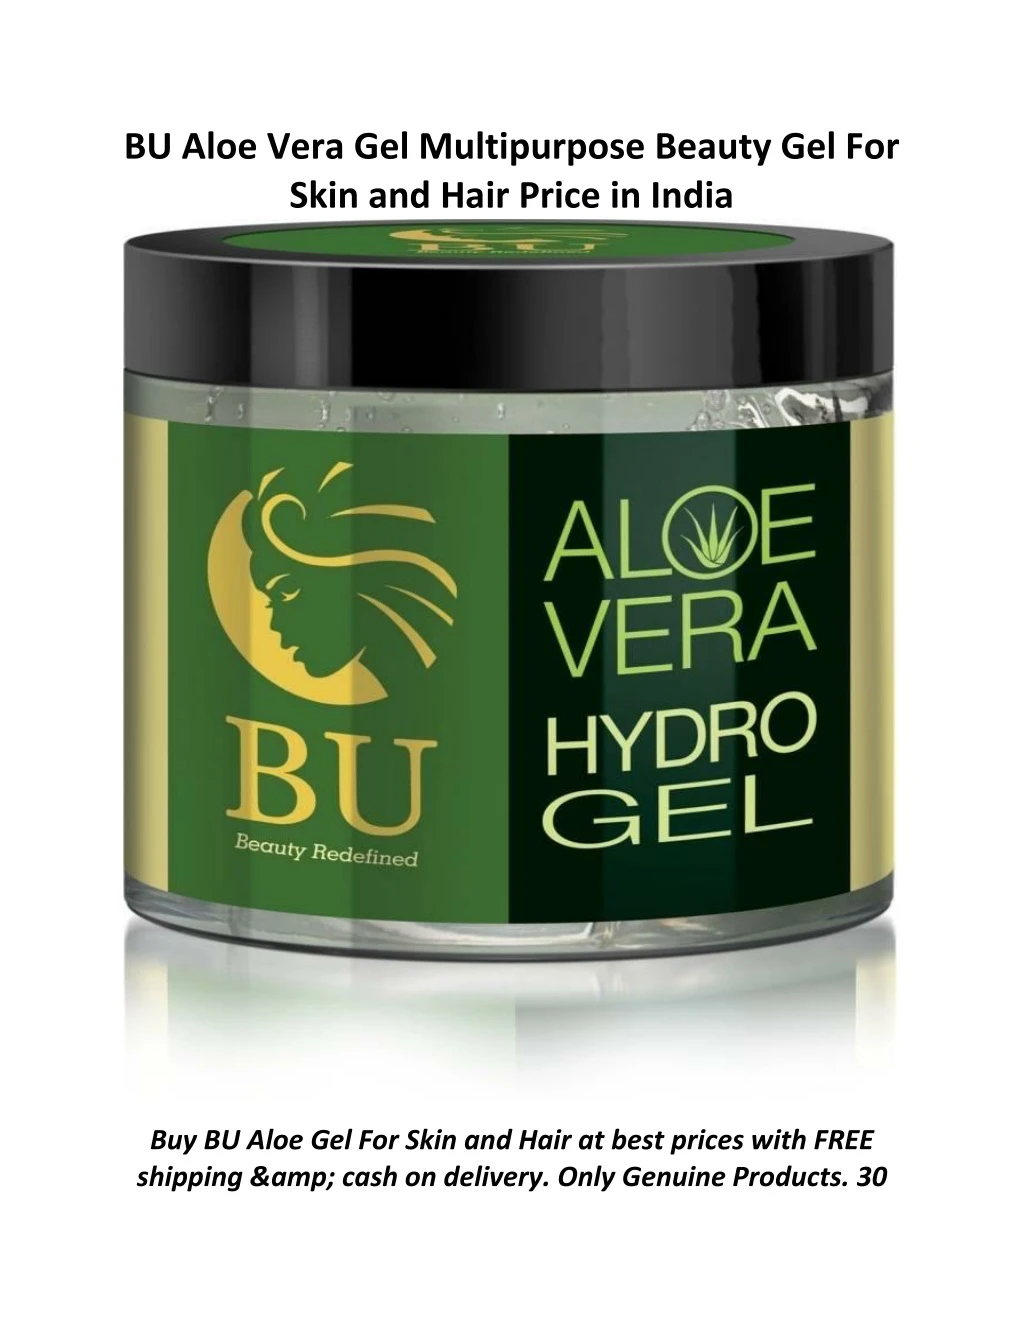 bu aloe vera gel multipurpose beauty gel for skin